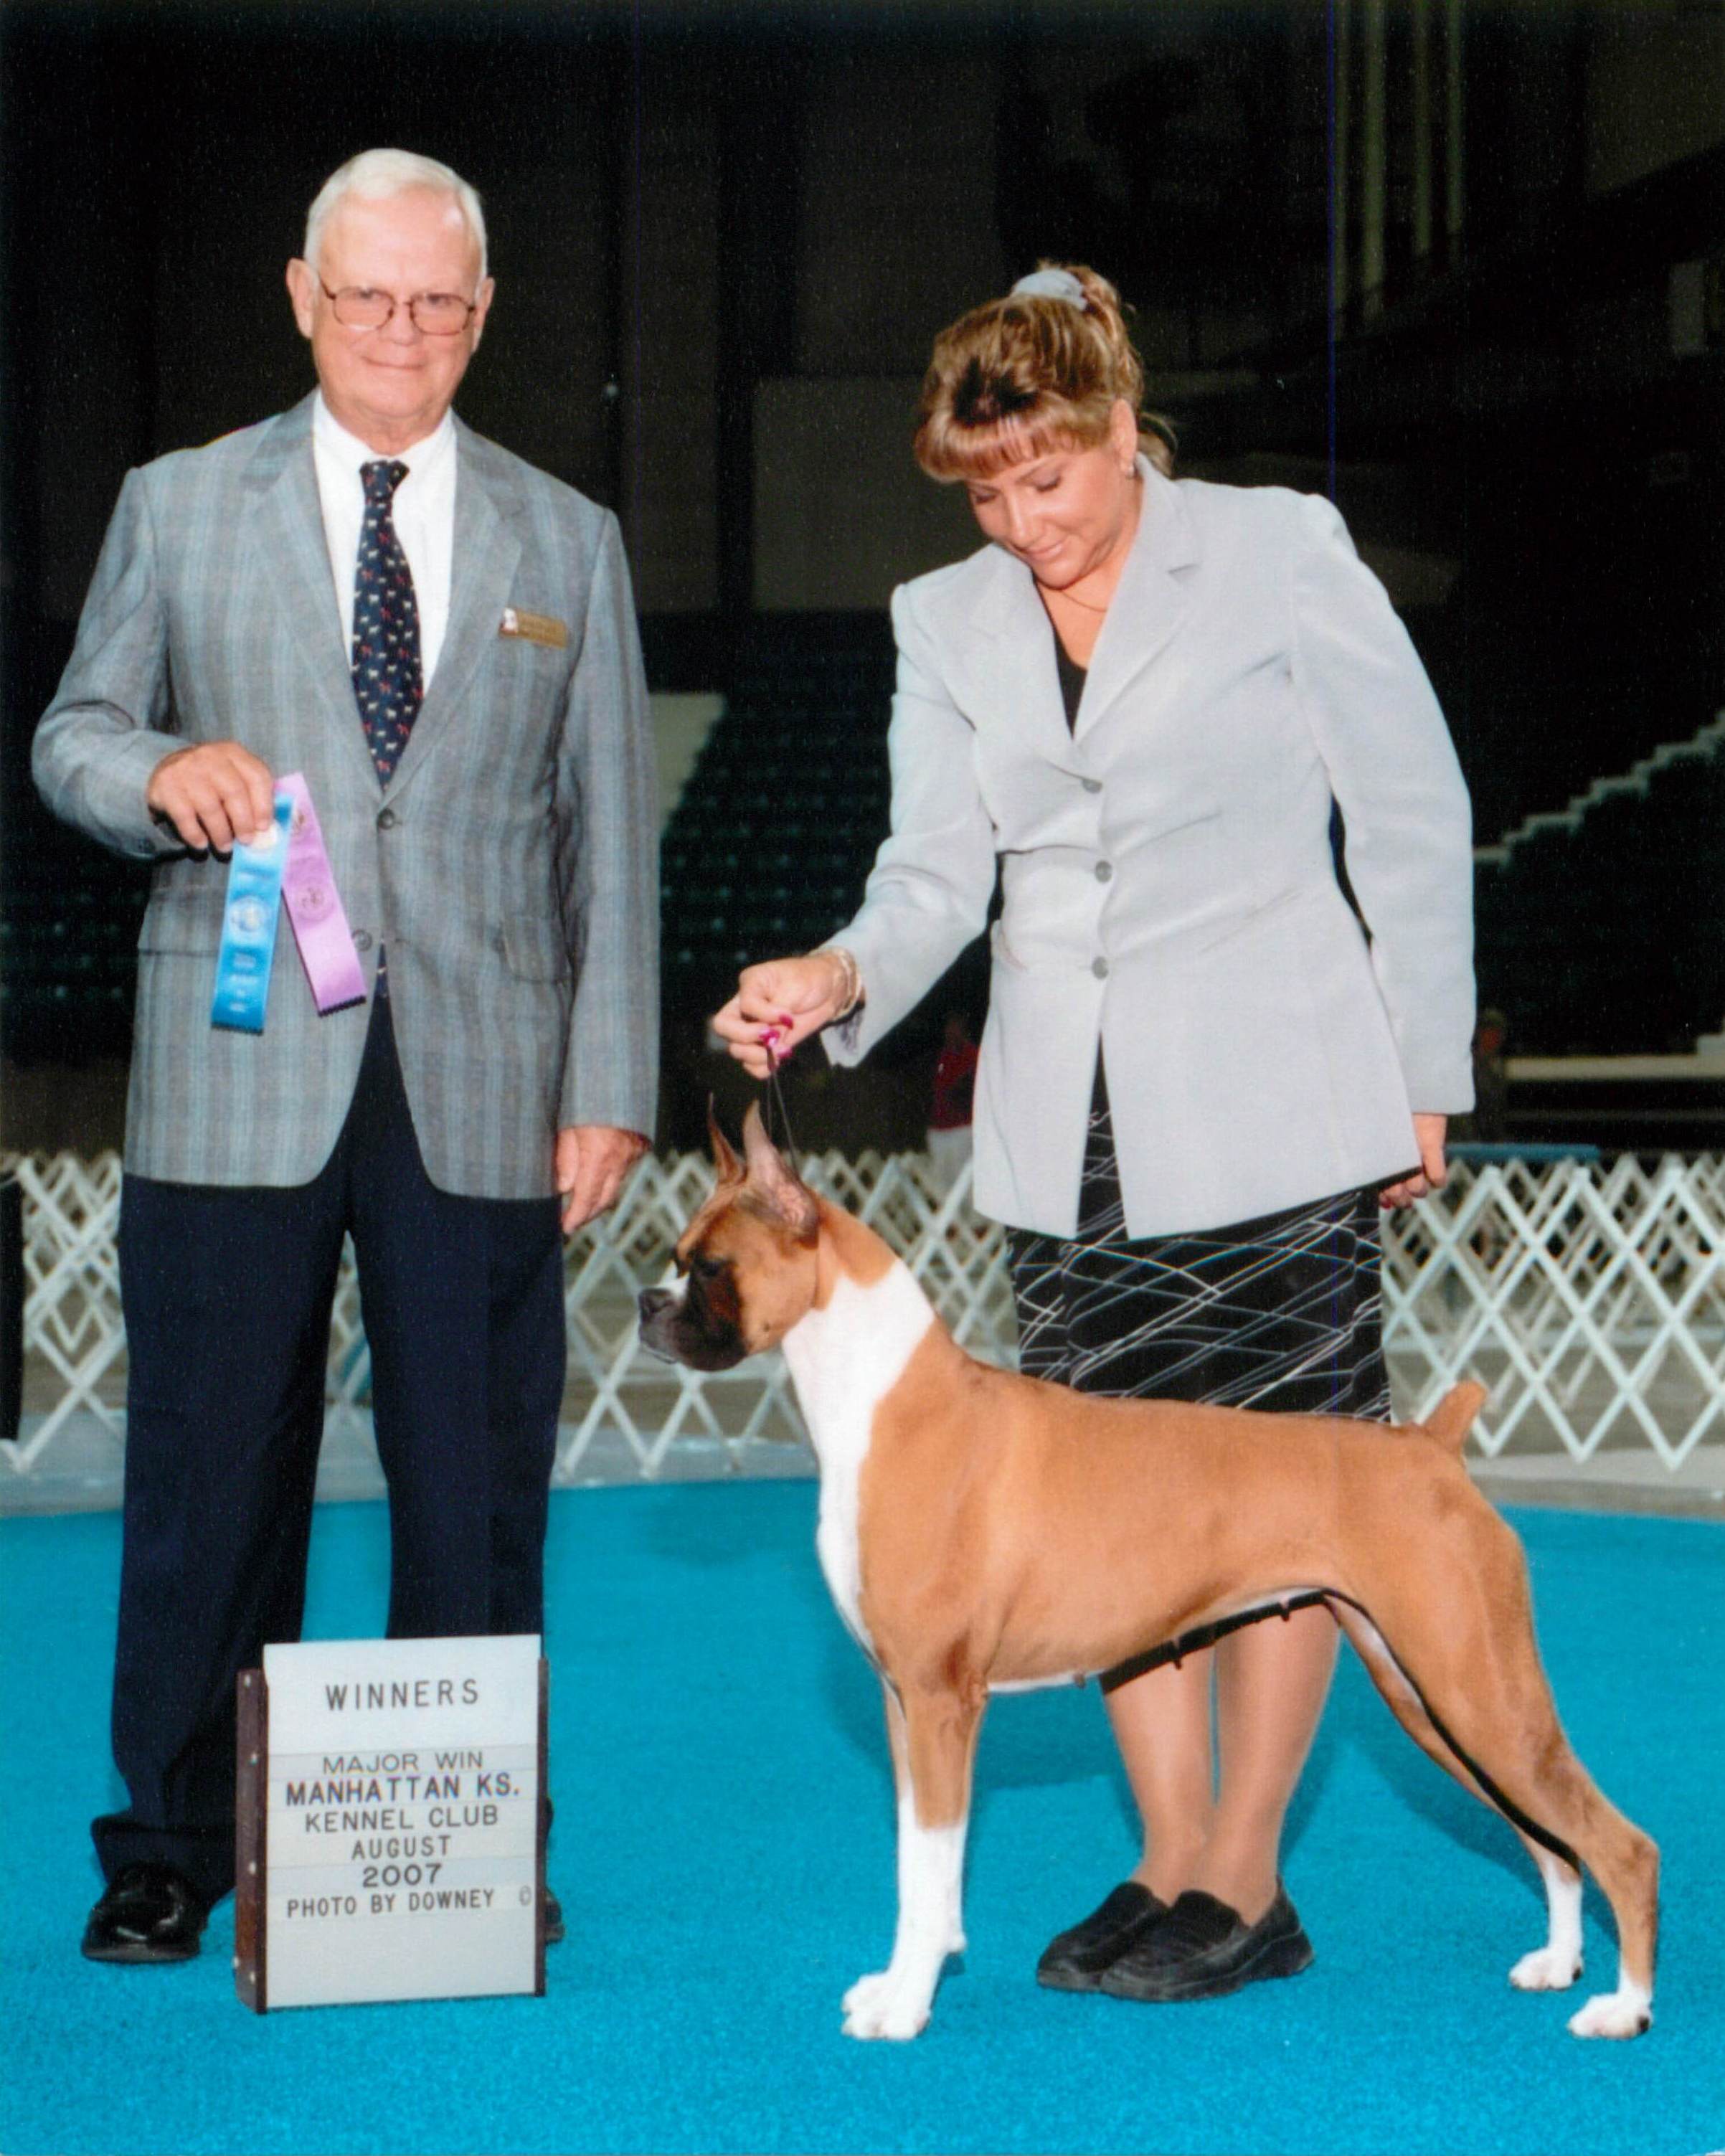 Winners Dog @ 2007 Specialty Show #1